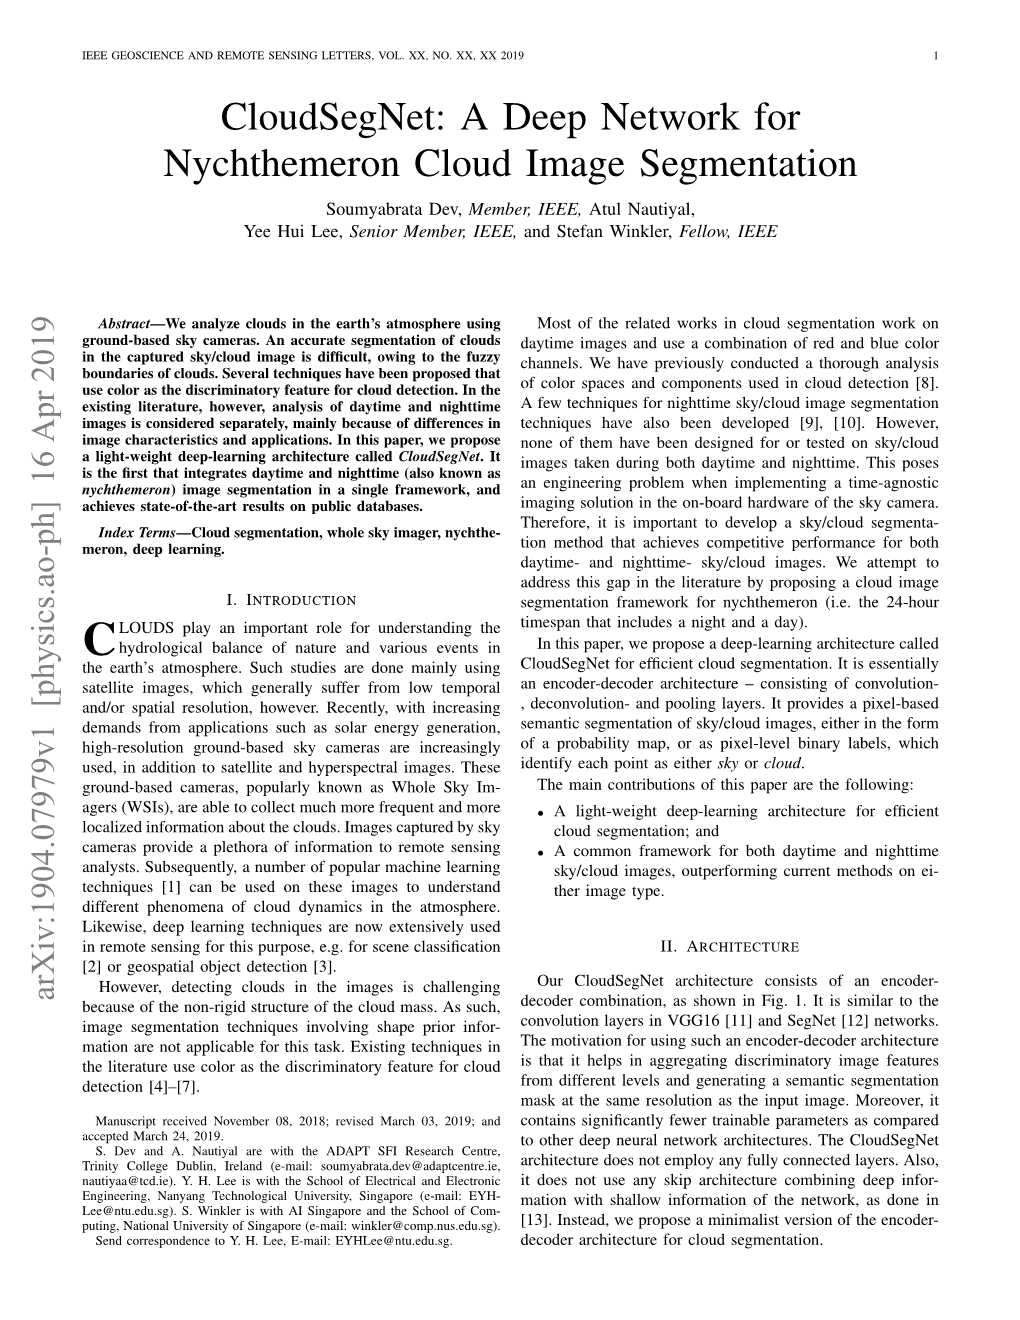 A Deep Network for Nychthemeron Cloud Image Segmentation